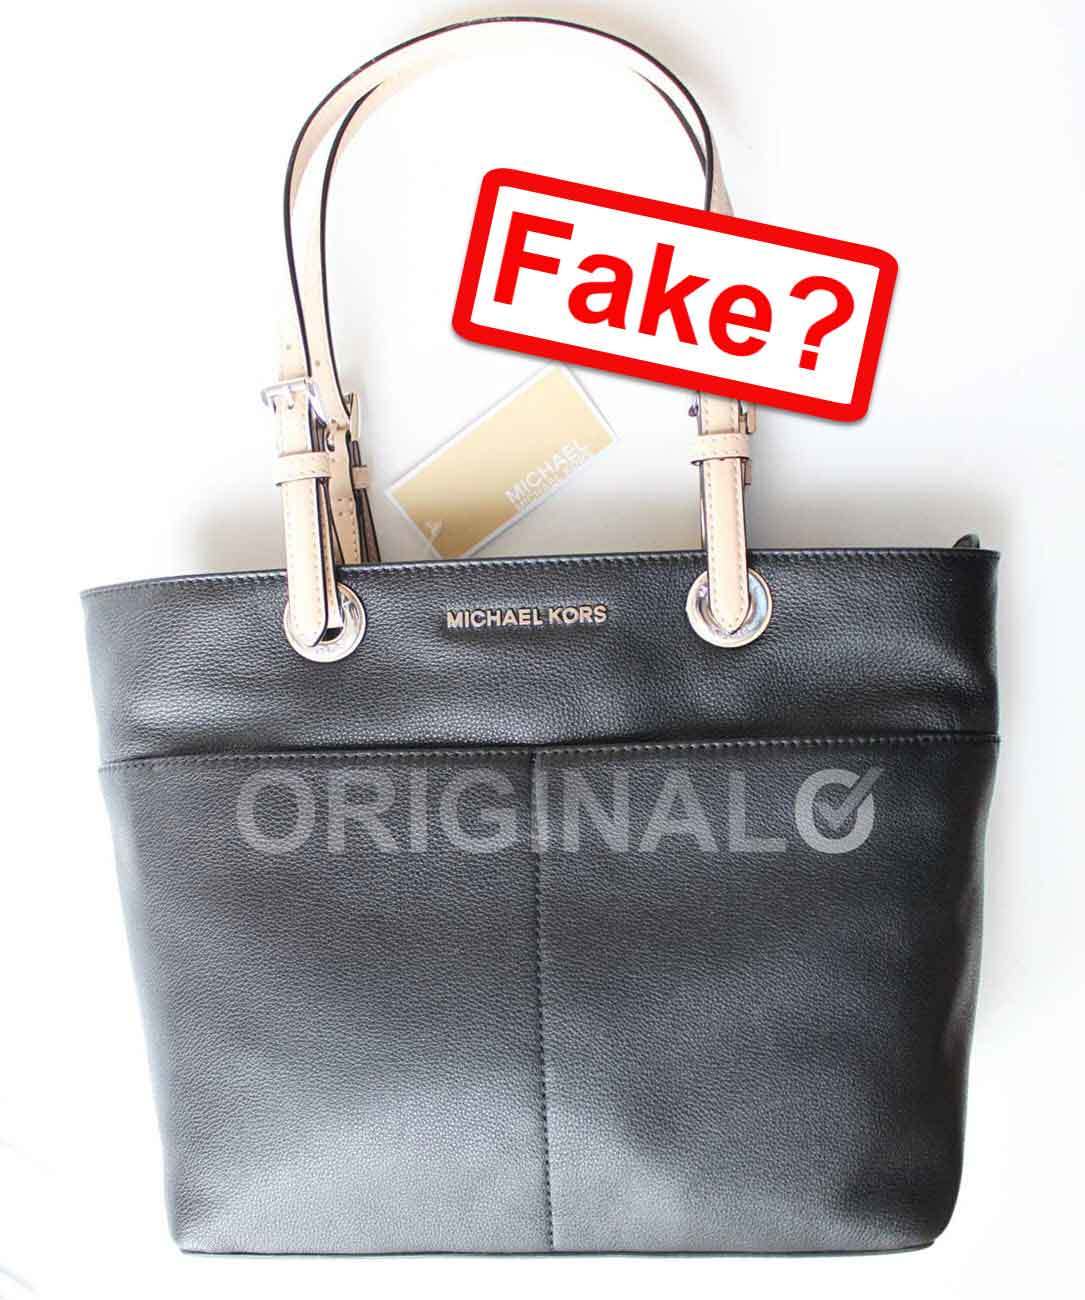 Legit authentic original MK Michael Kors Bag